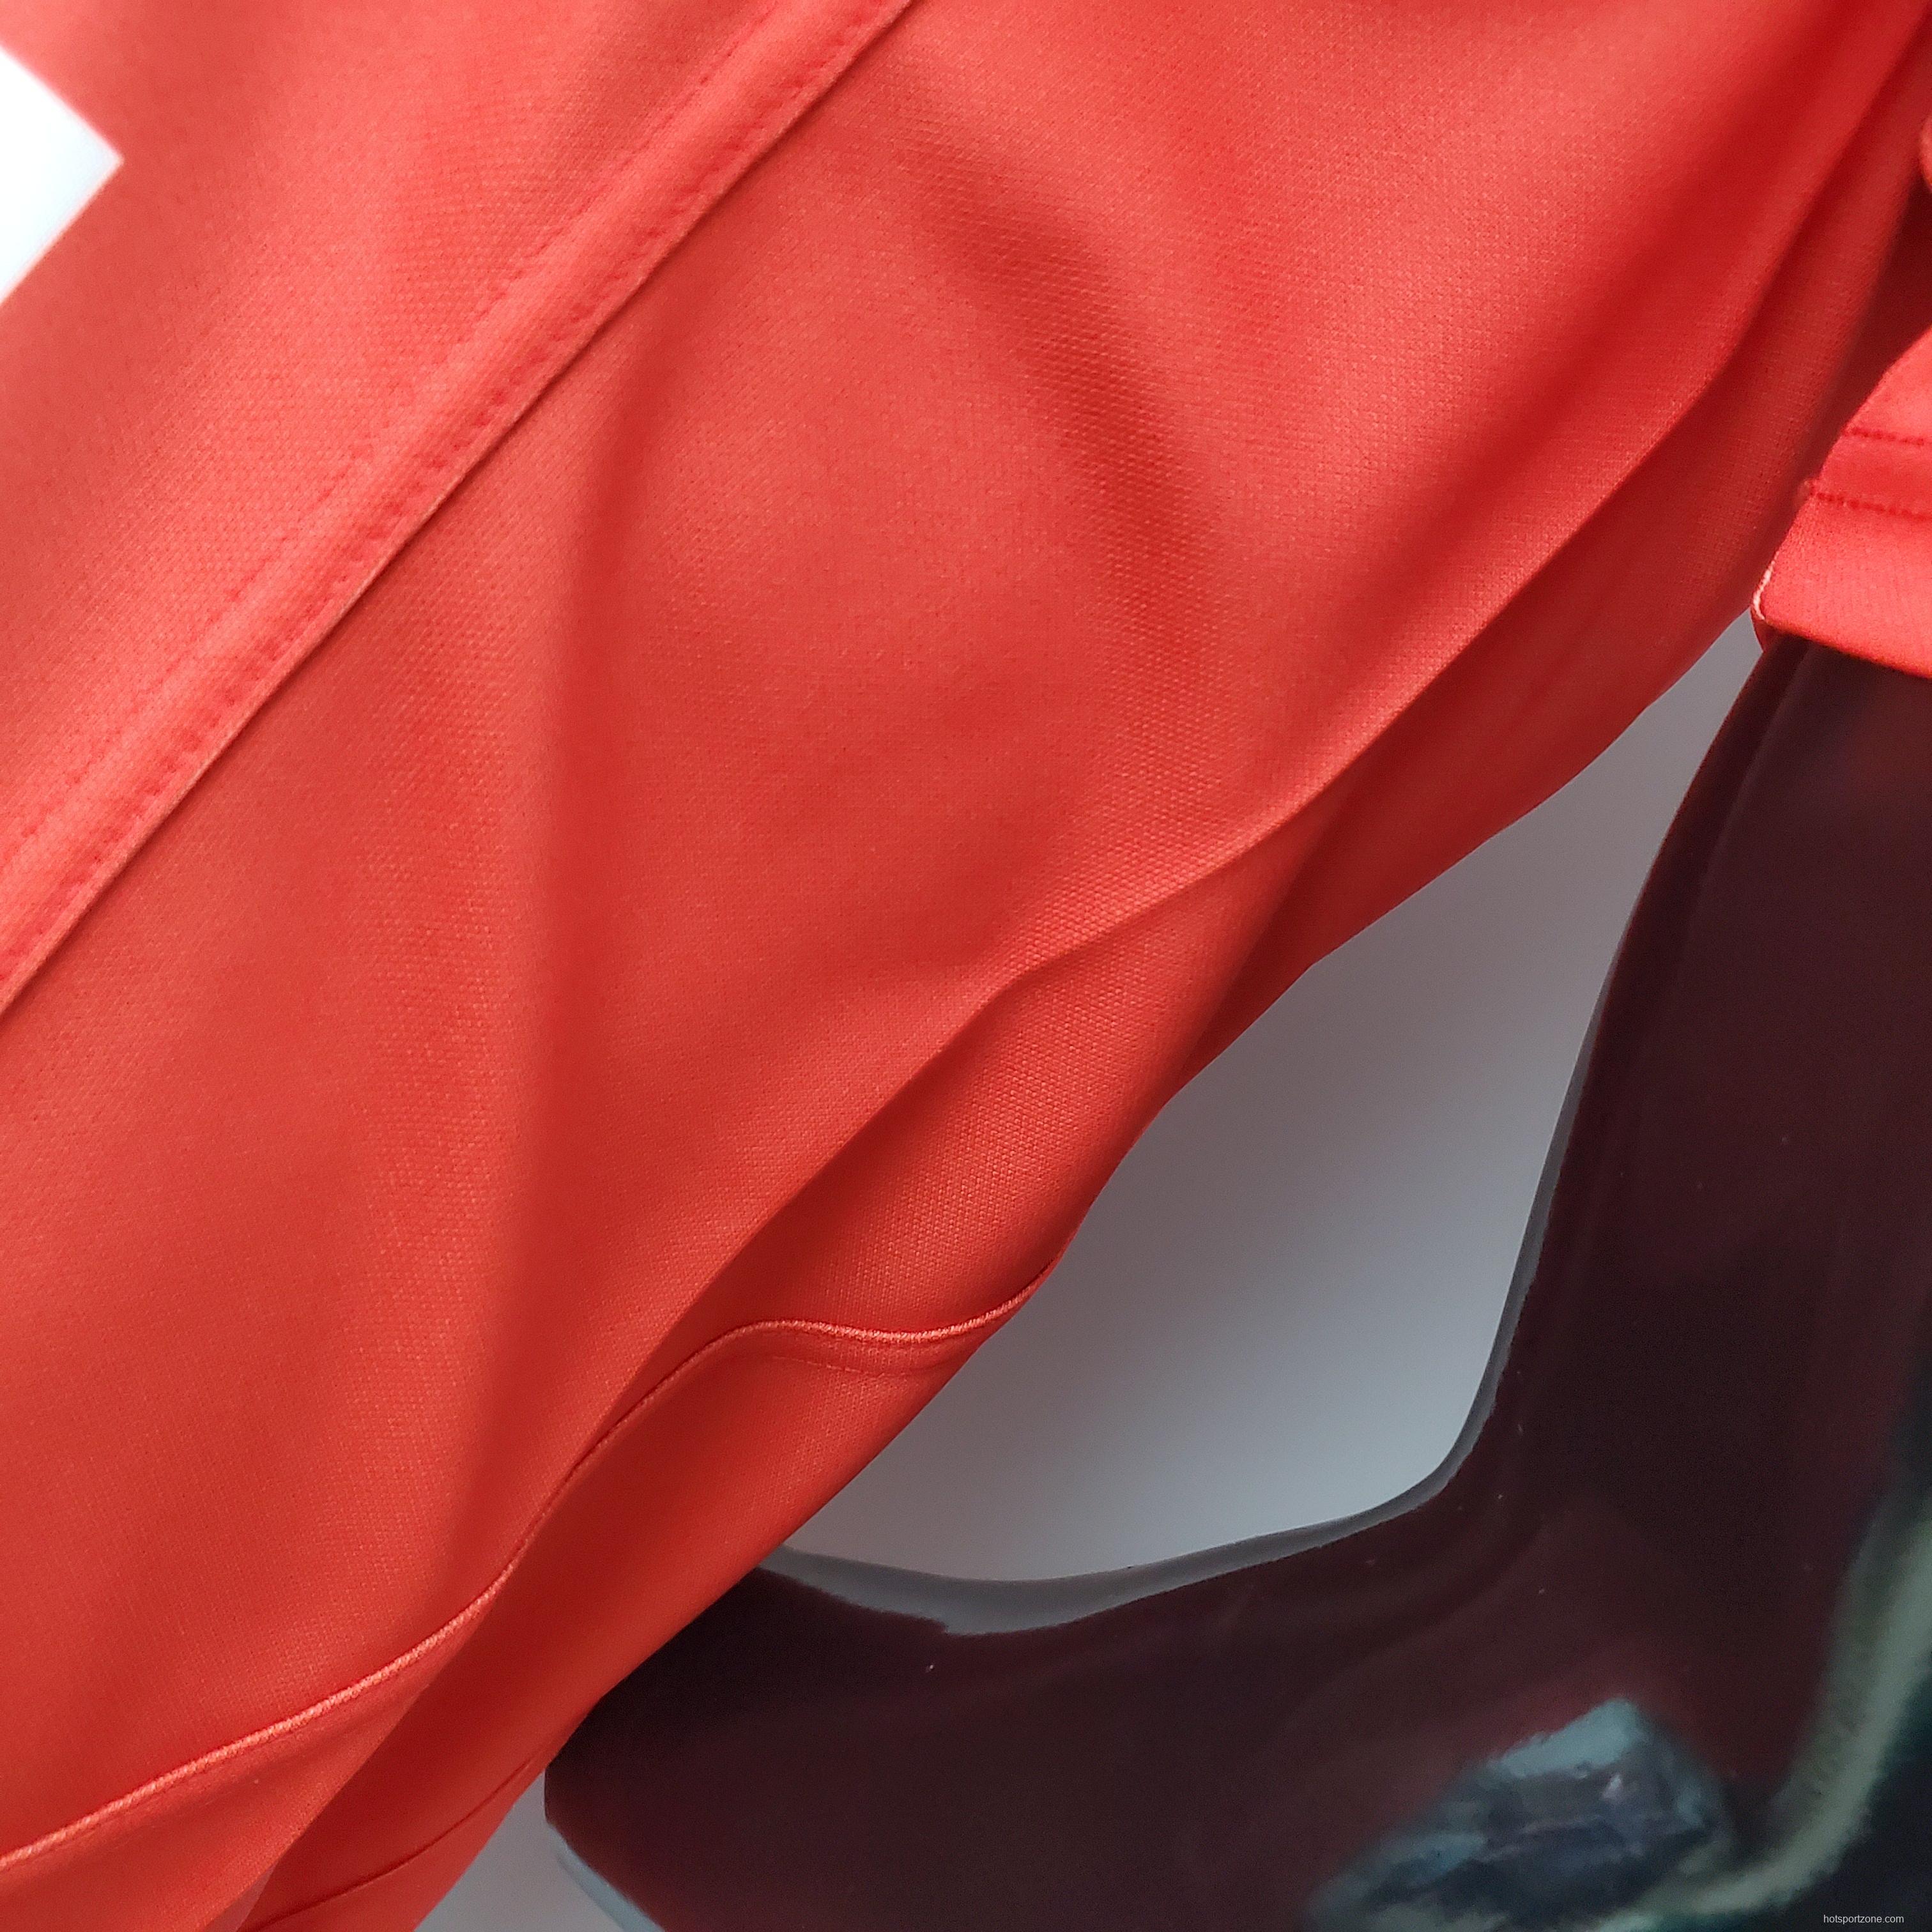 F1 Formula One; Ferrari racing suit red S-5XL